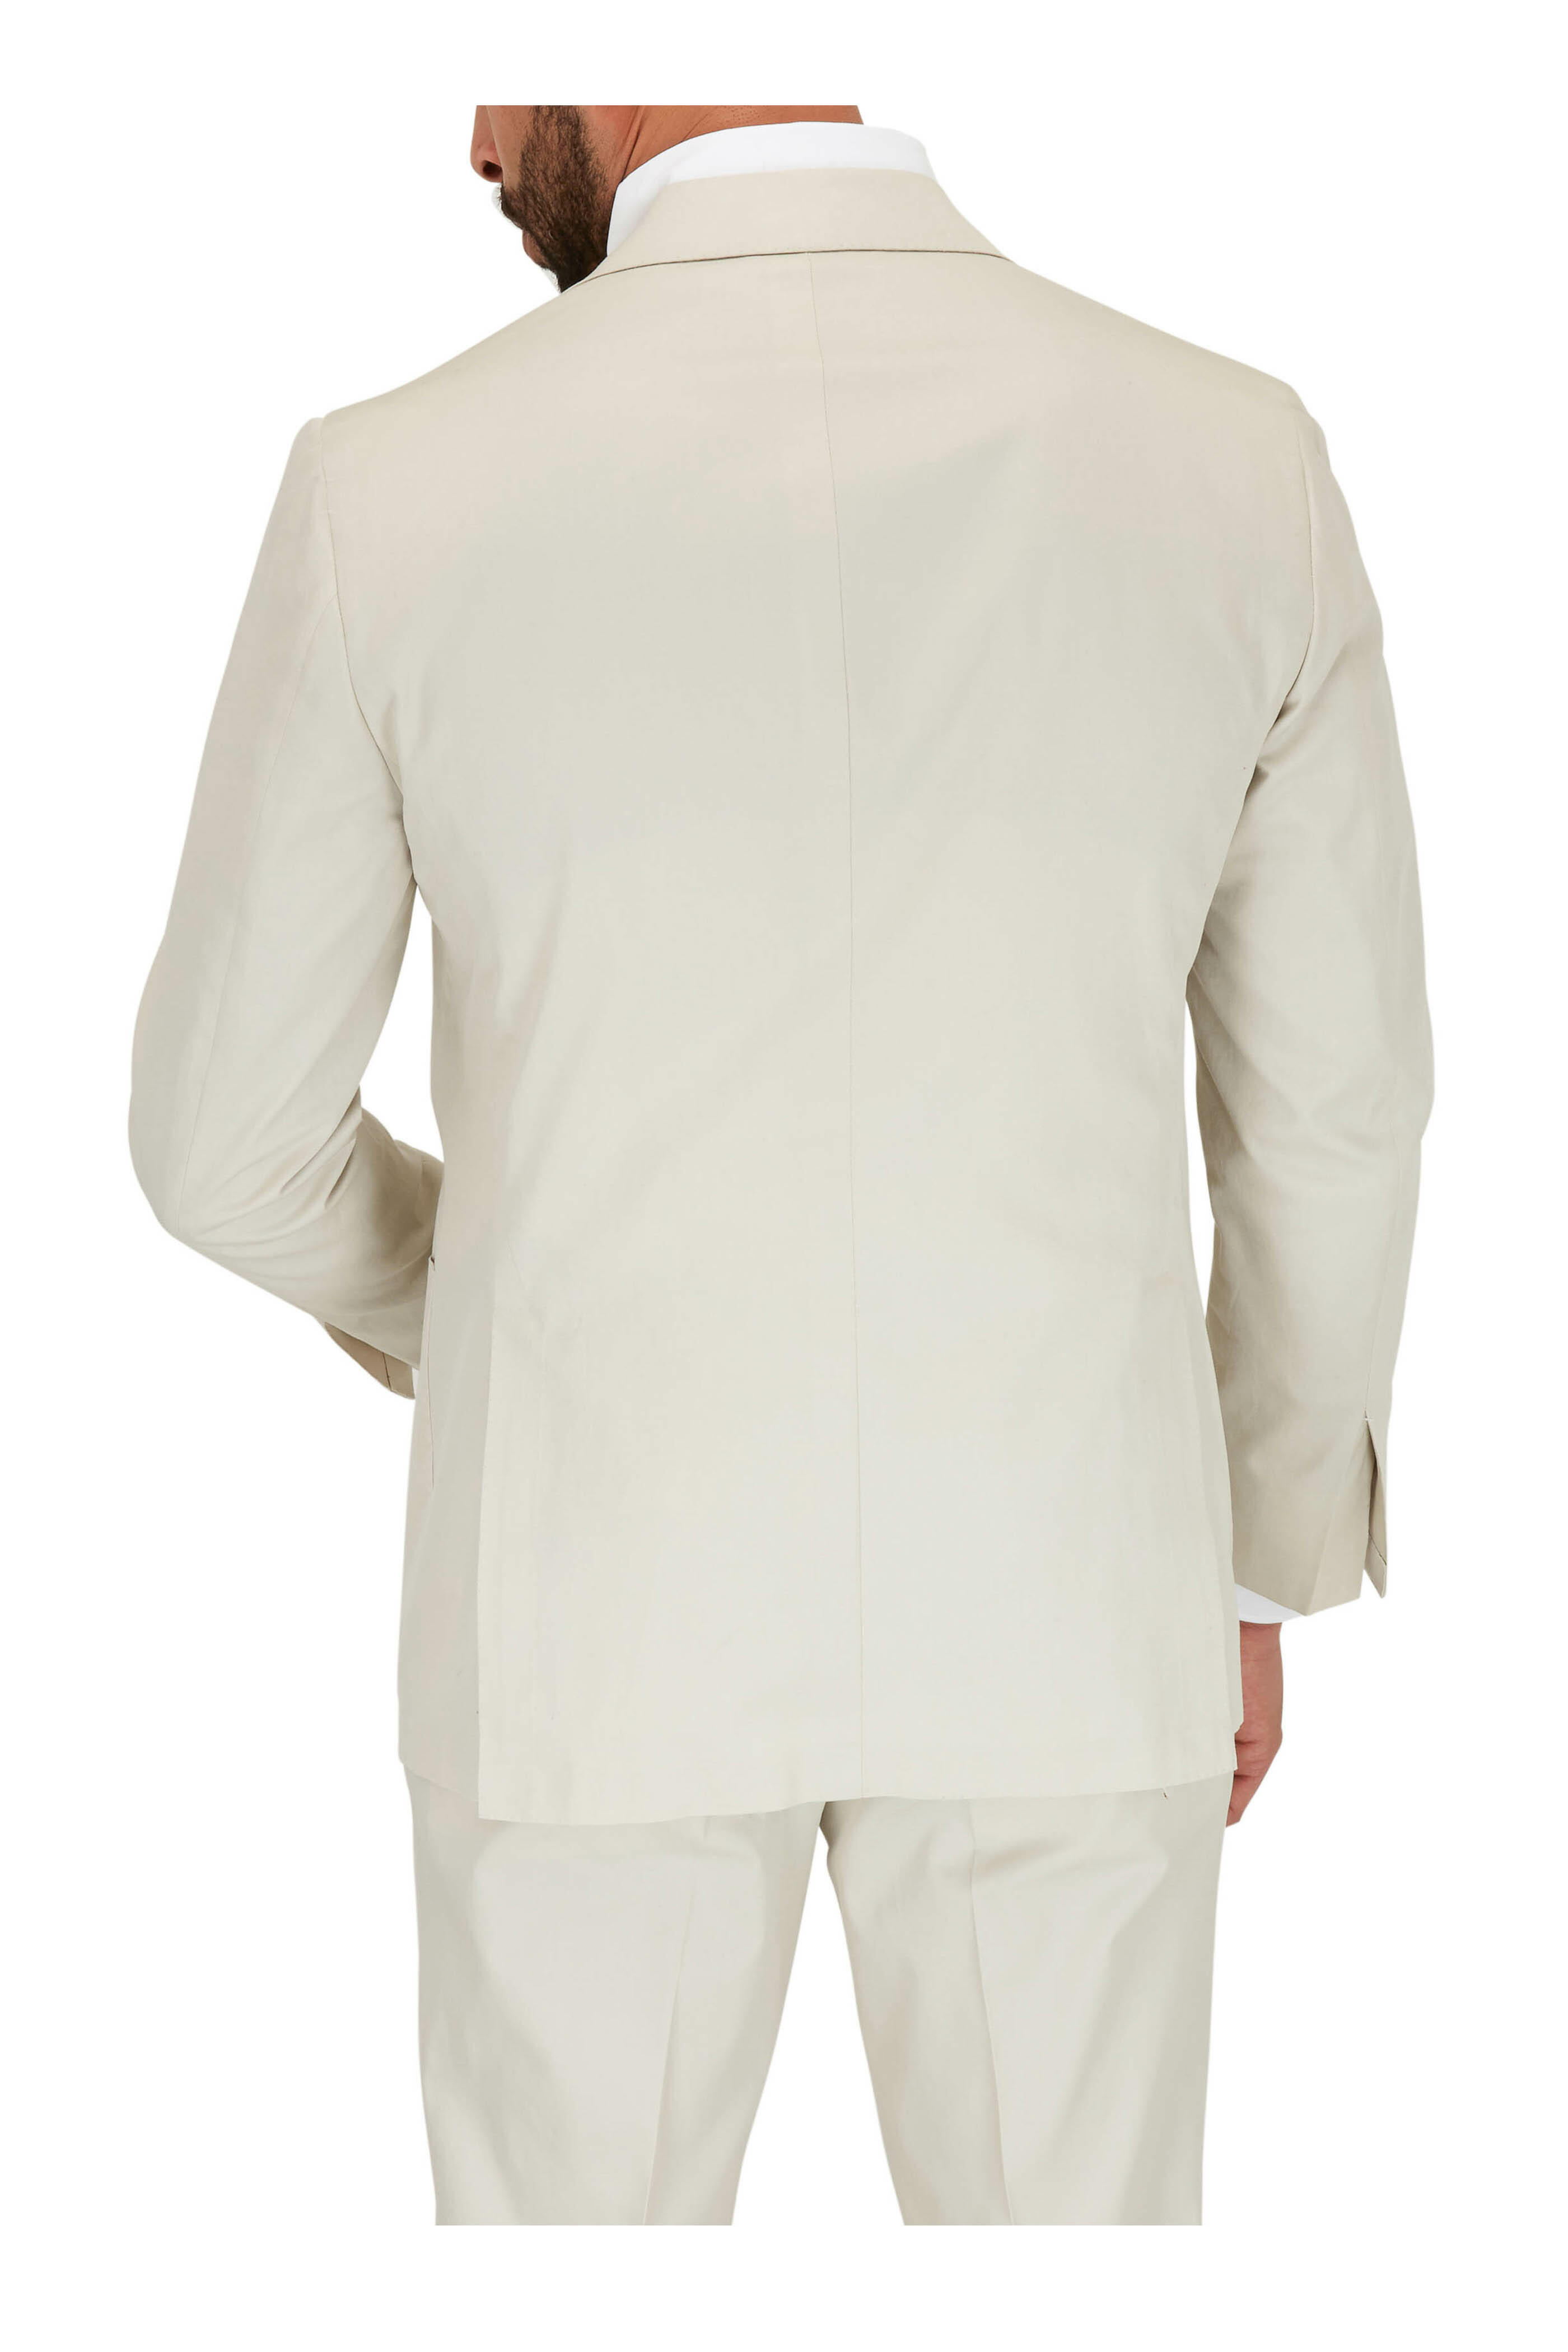 Kiton - Solid Stone Cotton Suit